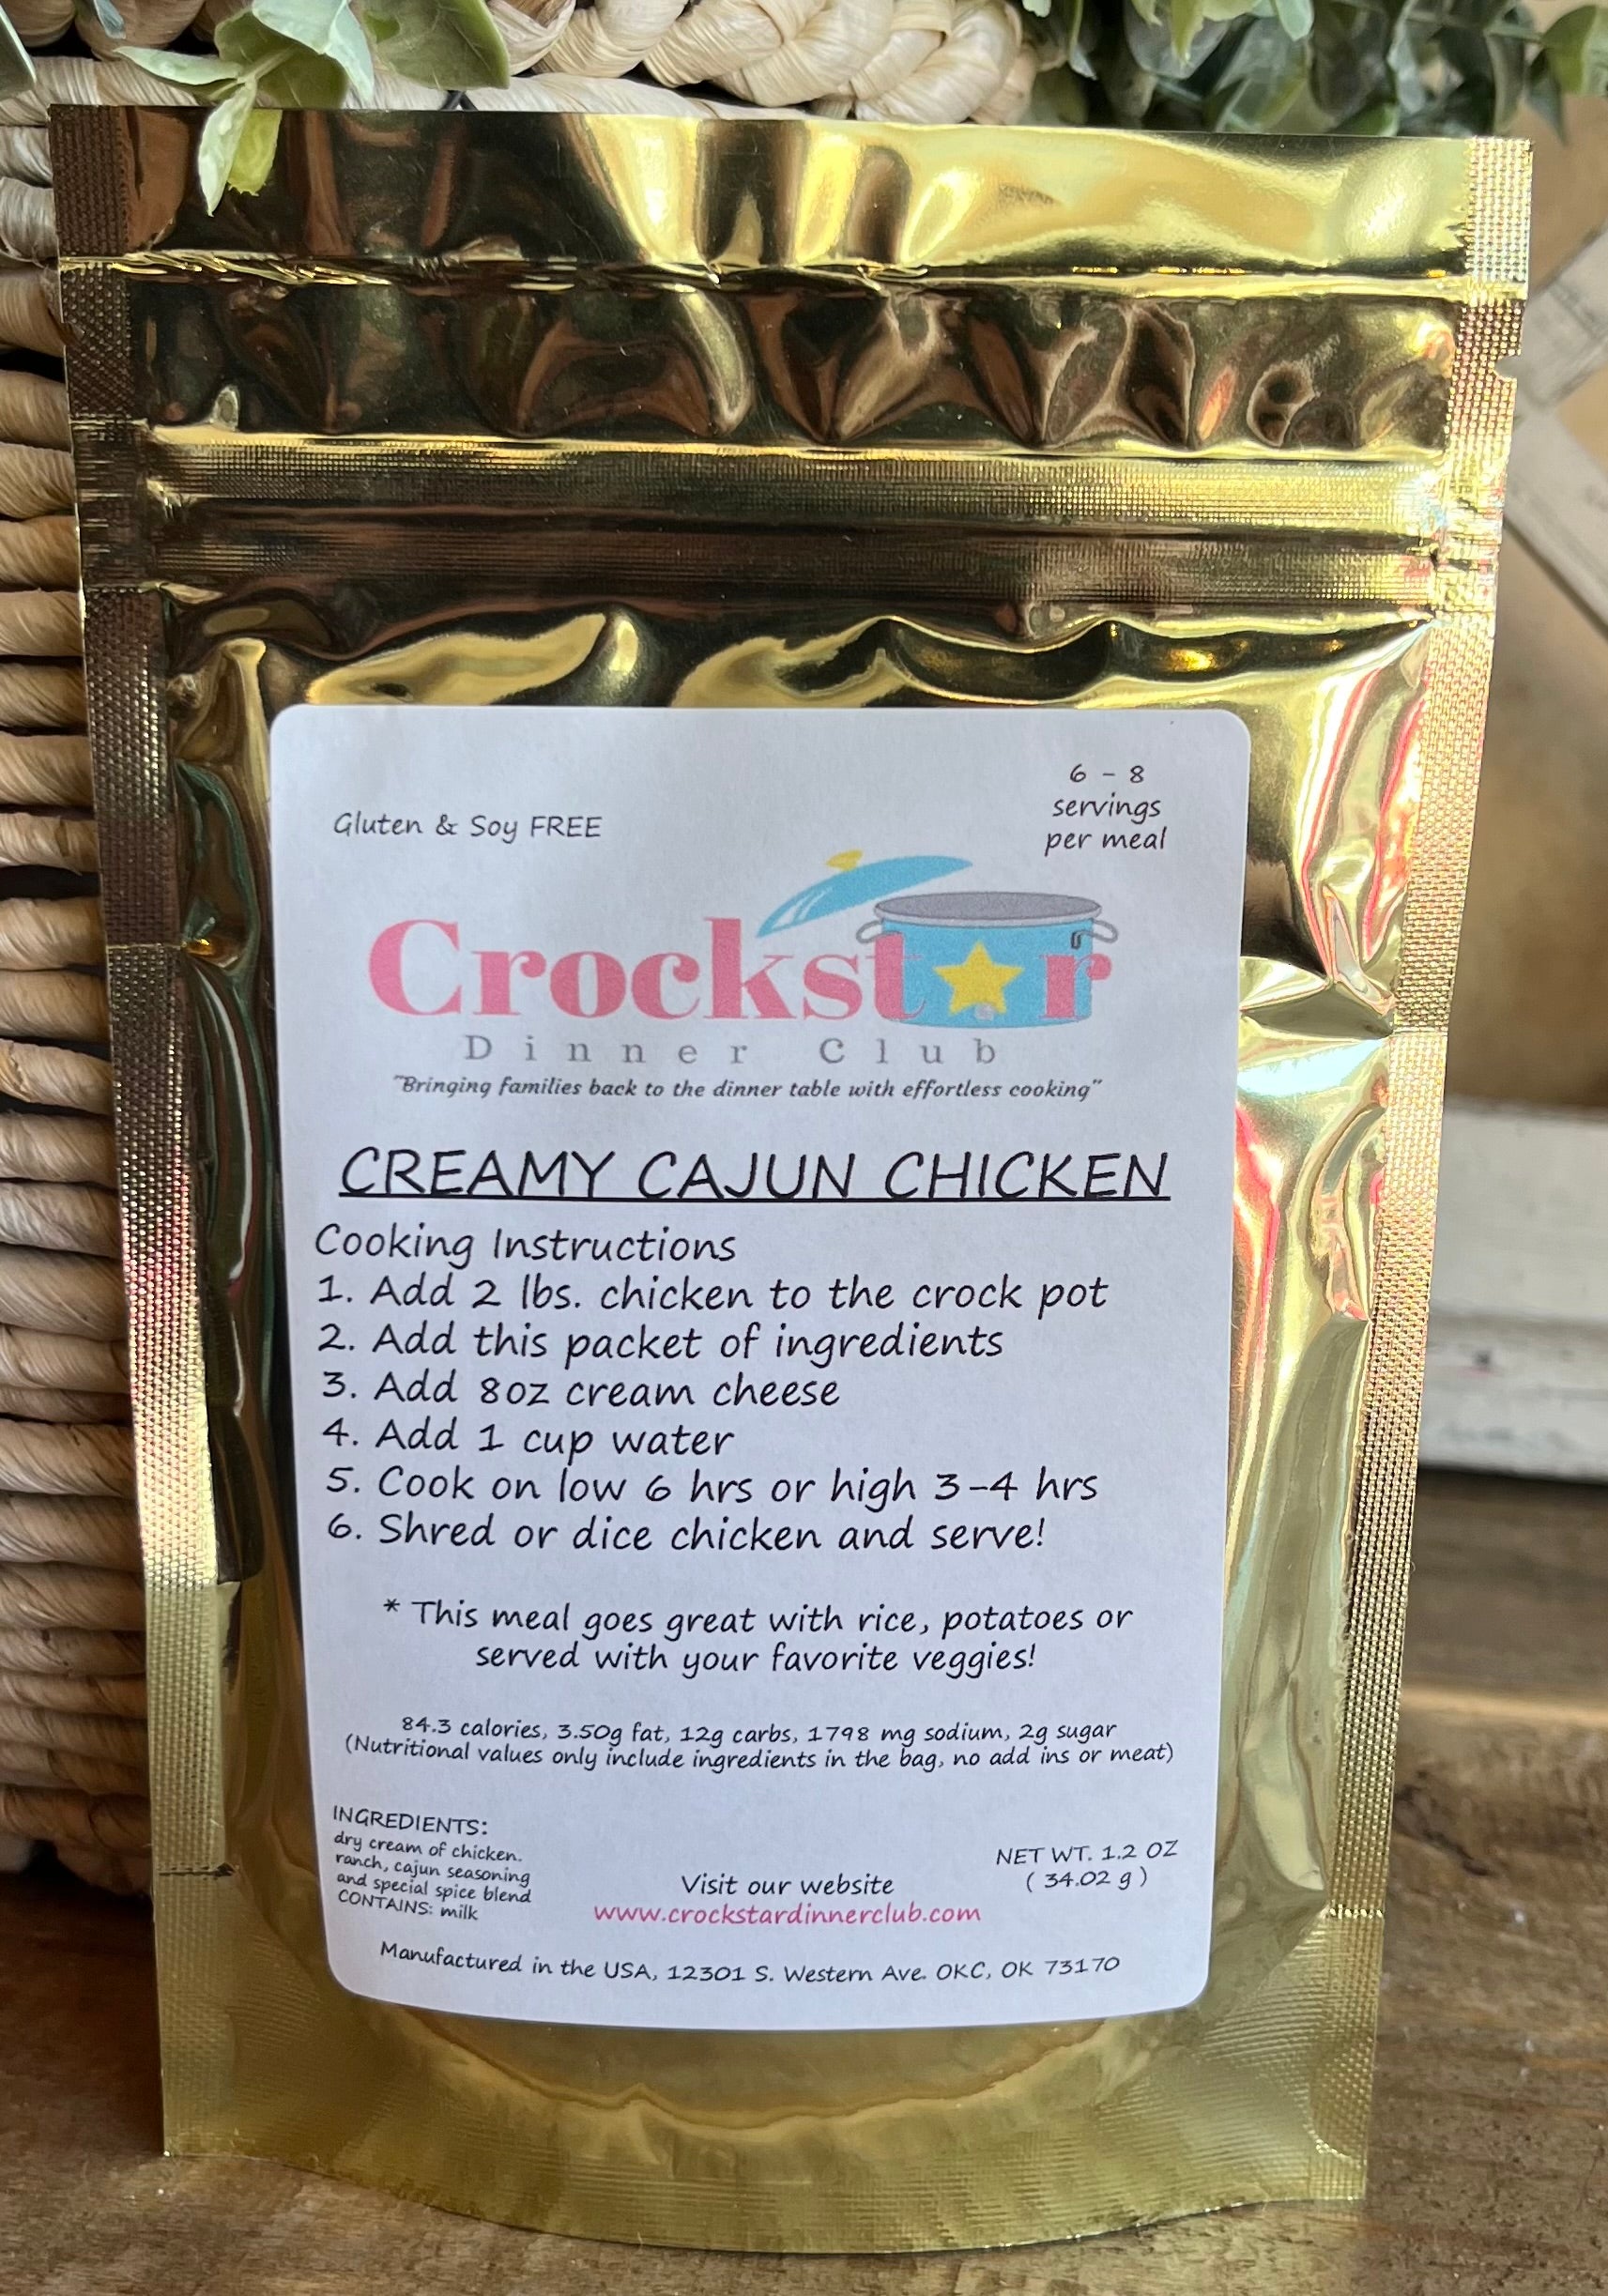 Crockstar Dinner Club - Creamy Cajun Chicken